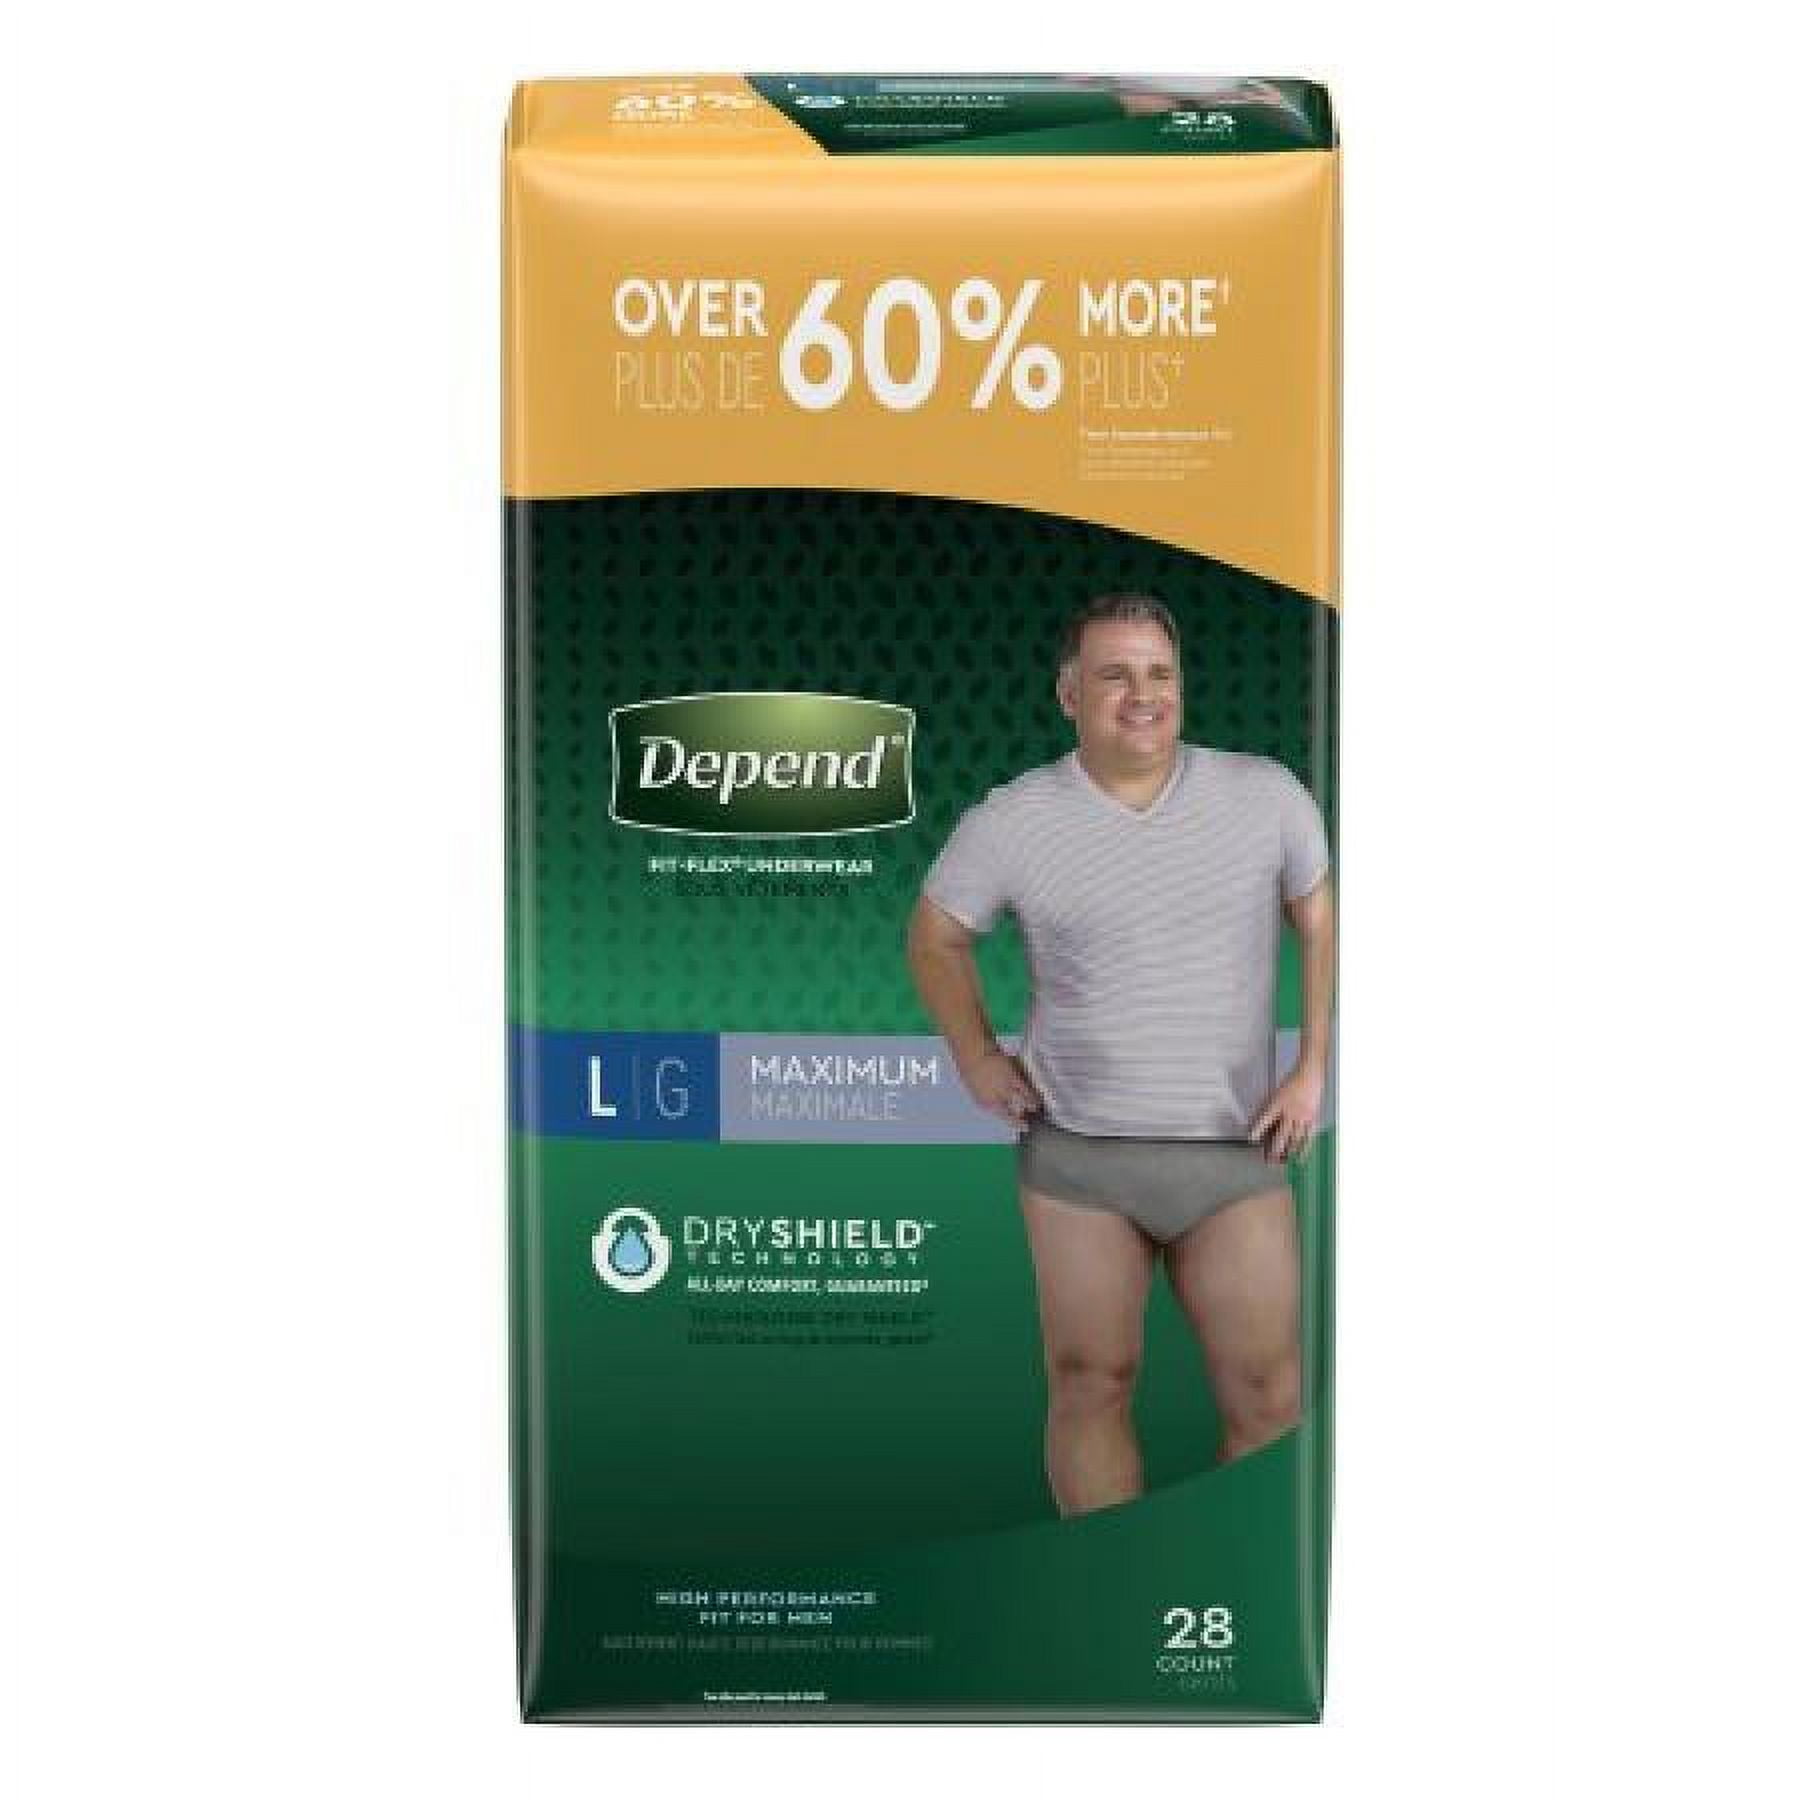 Depend Fit-Flex Underwear for Men - Jumbo Pack – Healthwick Canada